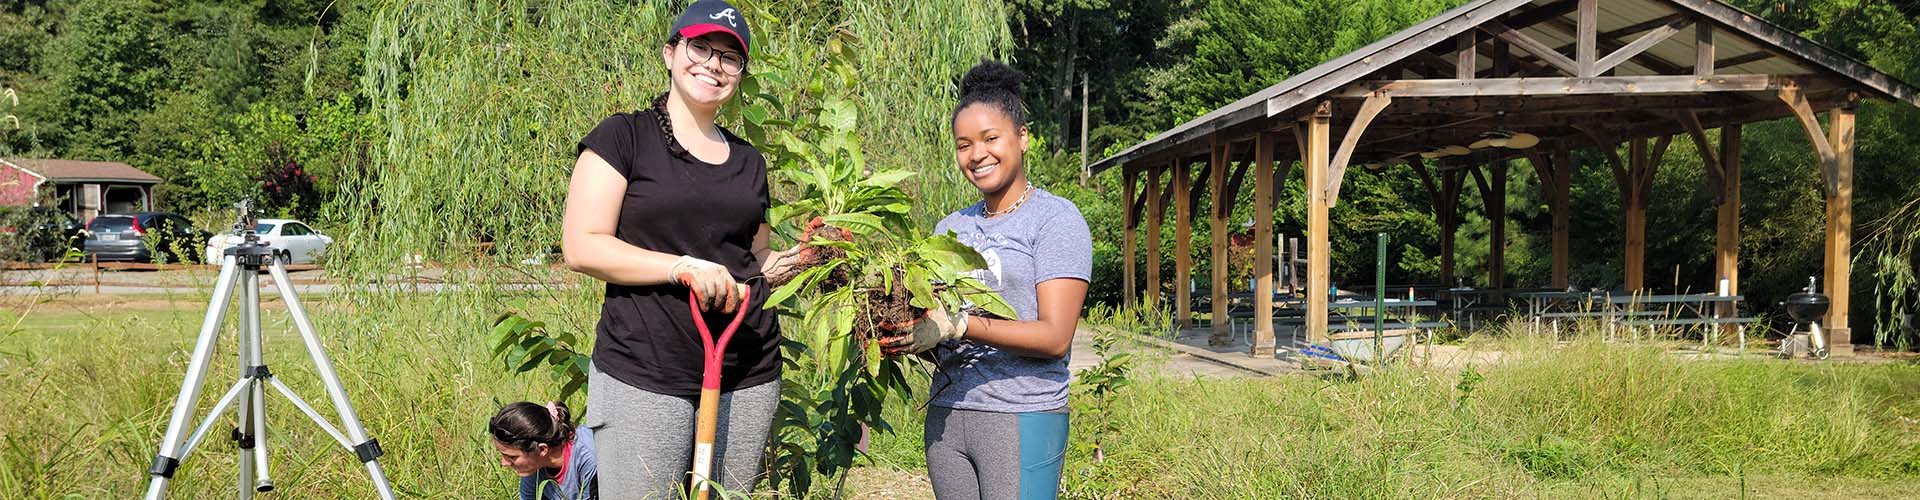 two female ksu students harvesting greens outside